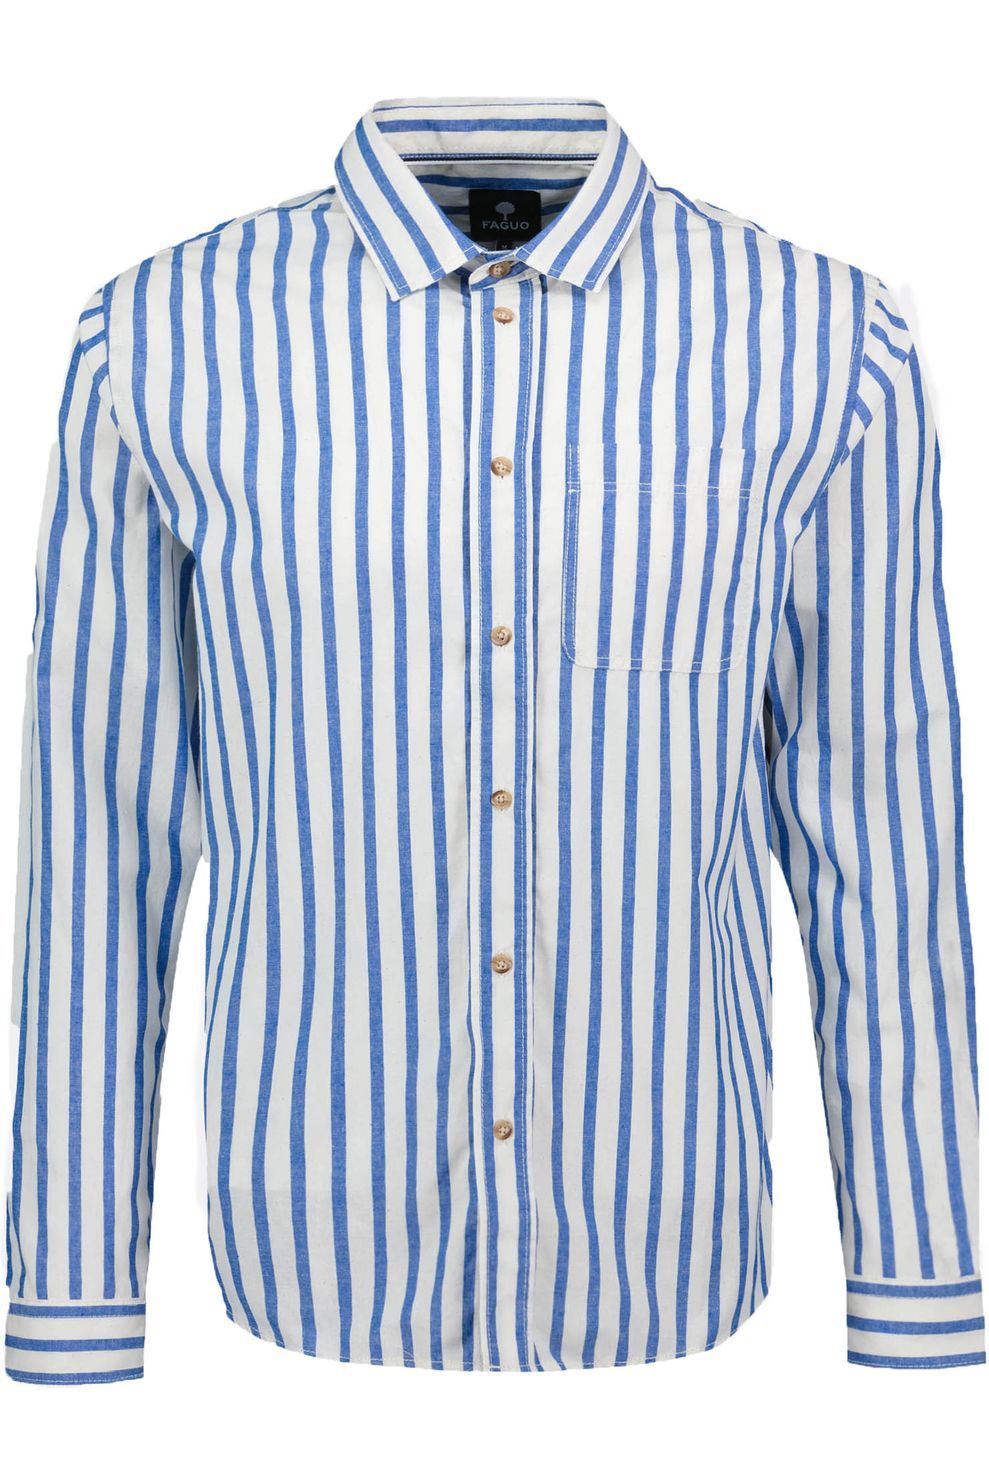 Faguo_Shirt FAG Signy Shirt blue stripe_JUTTU_€90